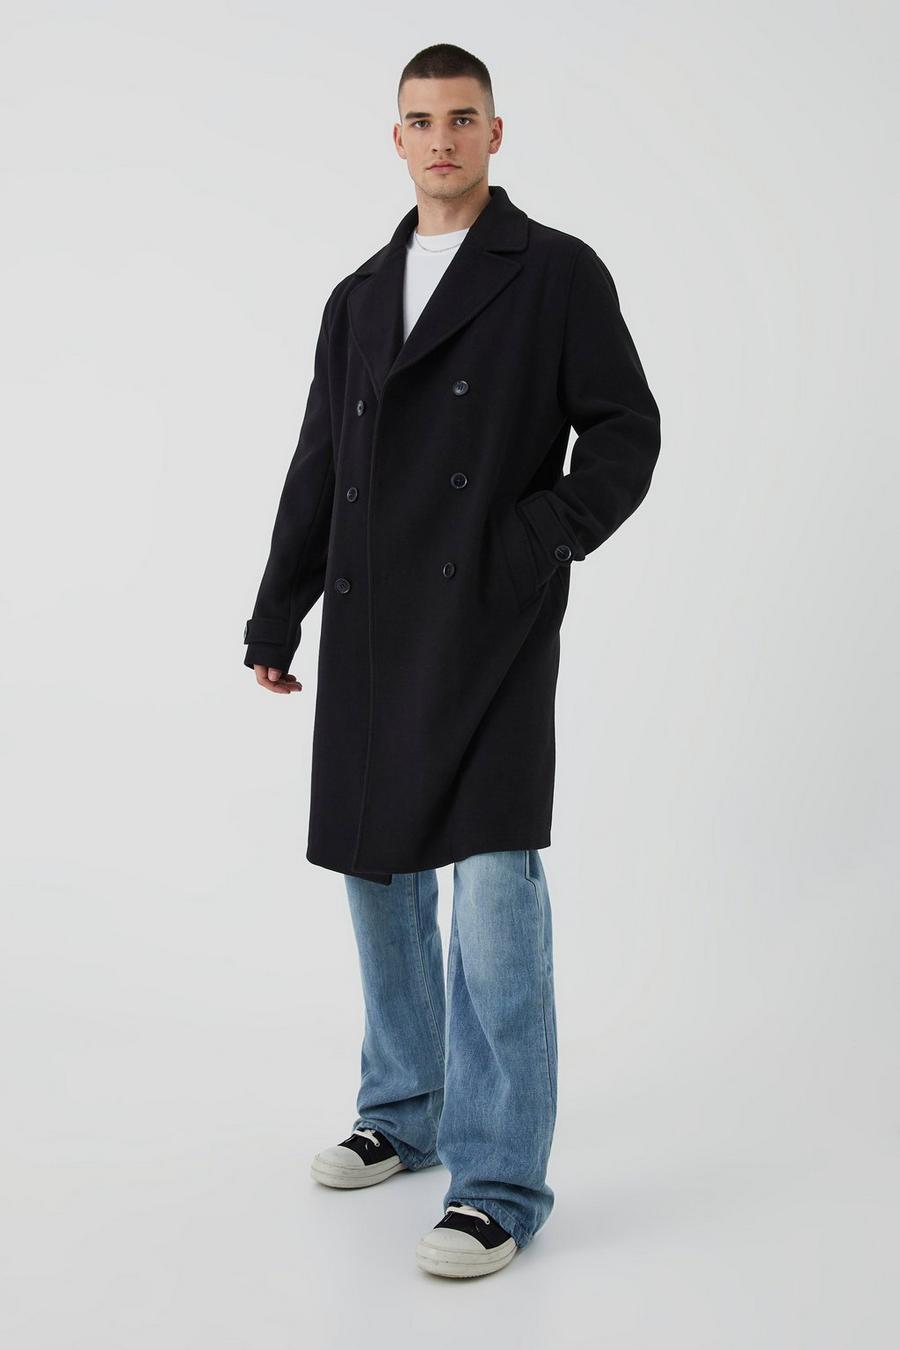 Men's Tall Double Breasted Wool Look Overcoat in Black | Boohoo UK